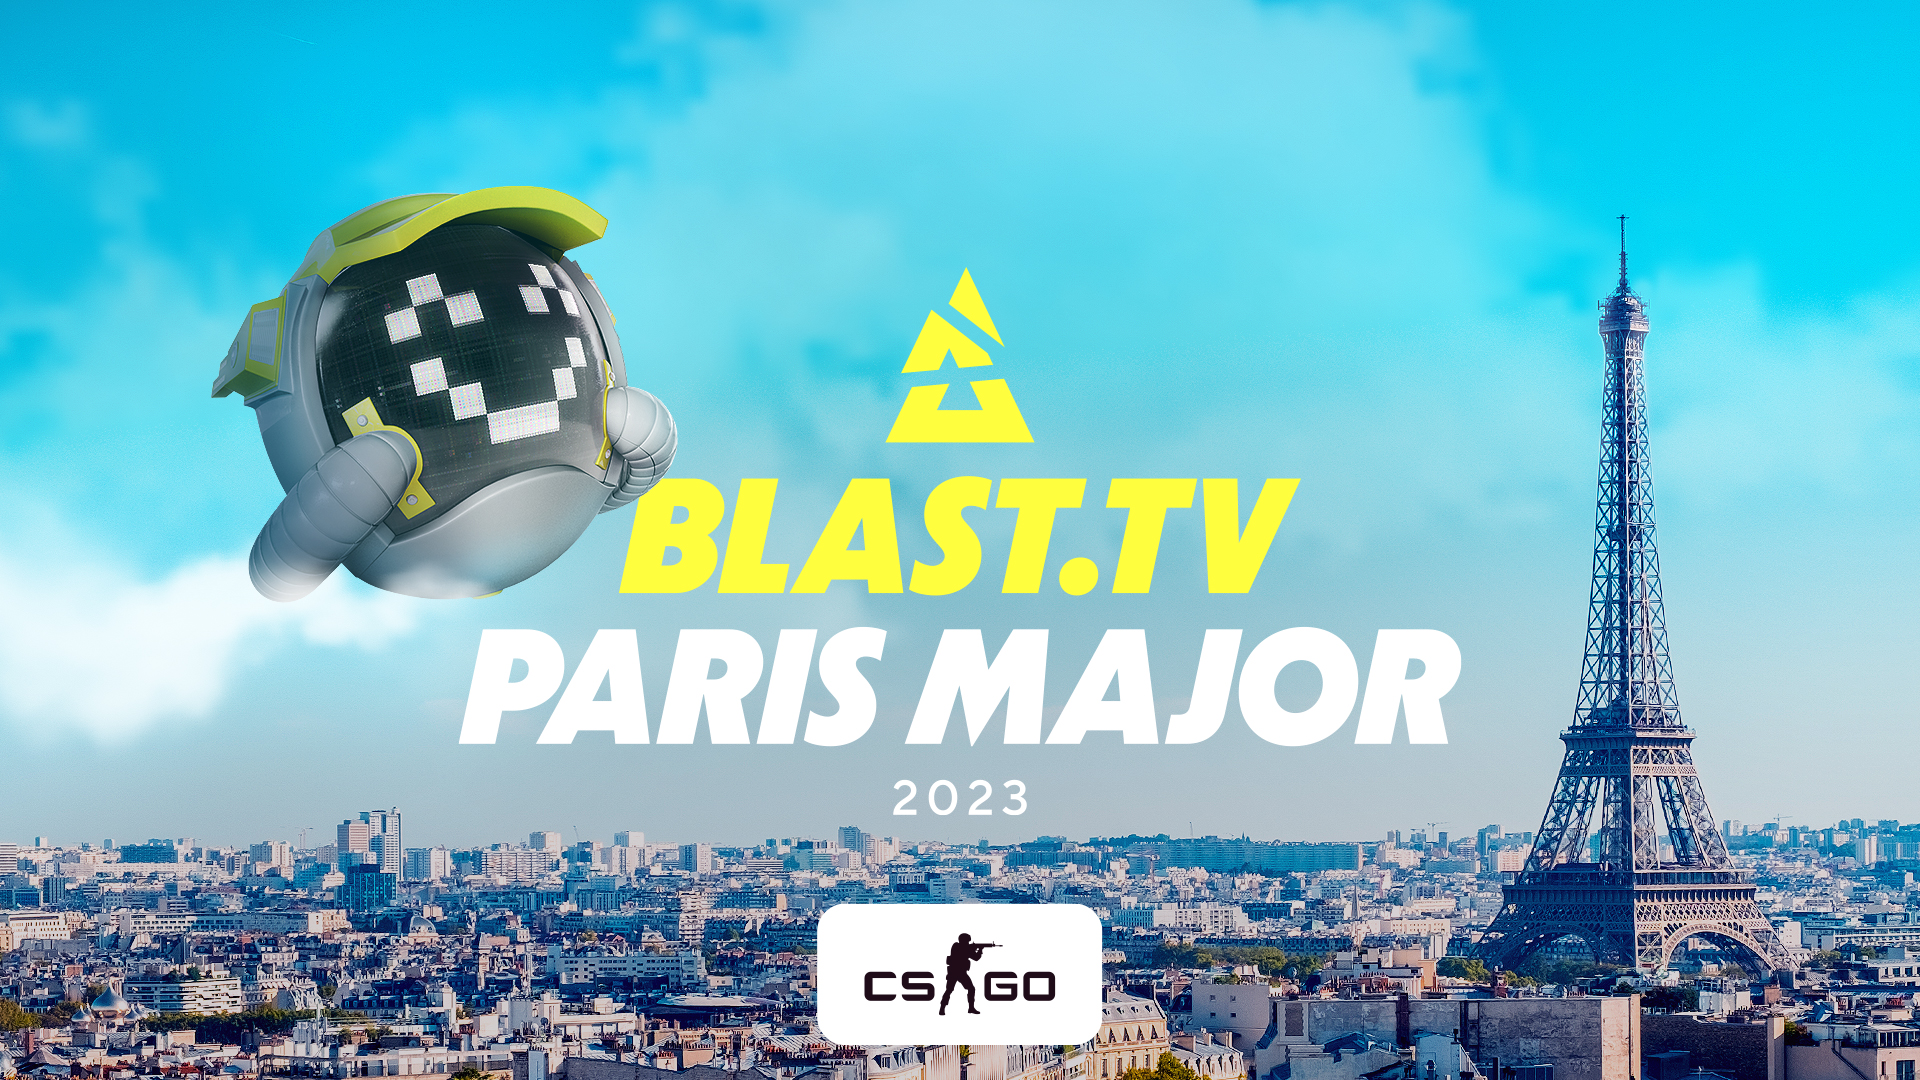 CS:GO: BLAST Announcements for the Paris Major